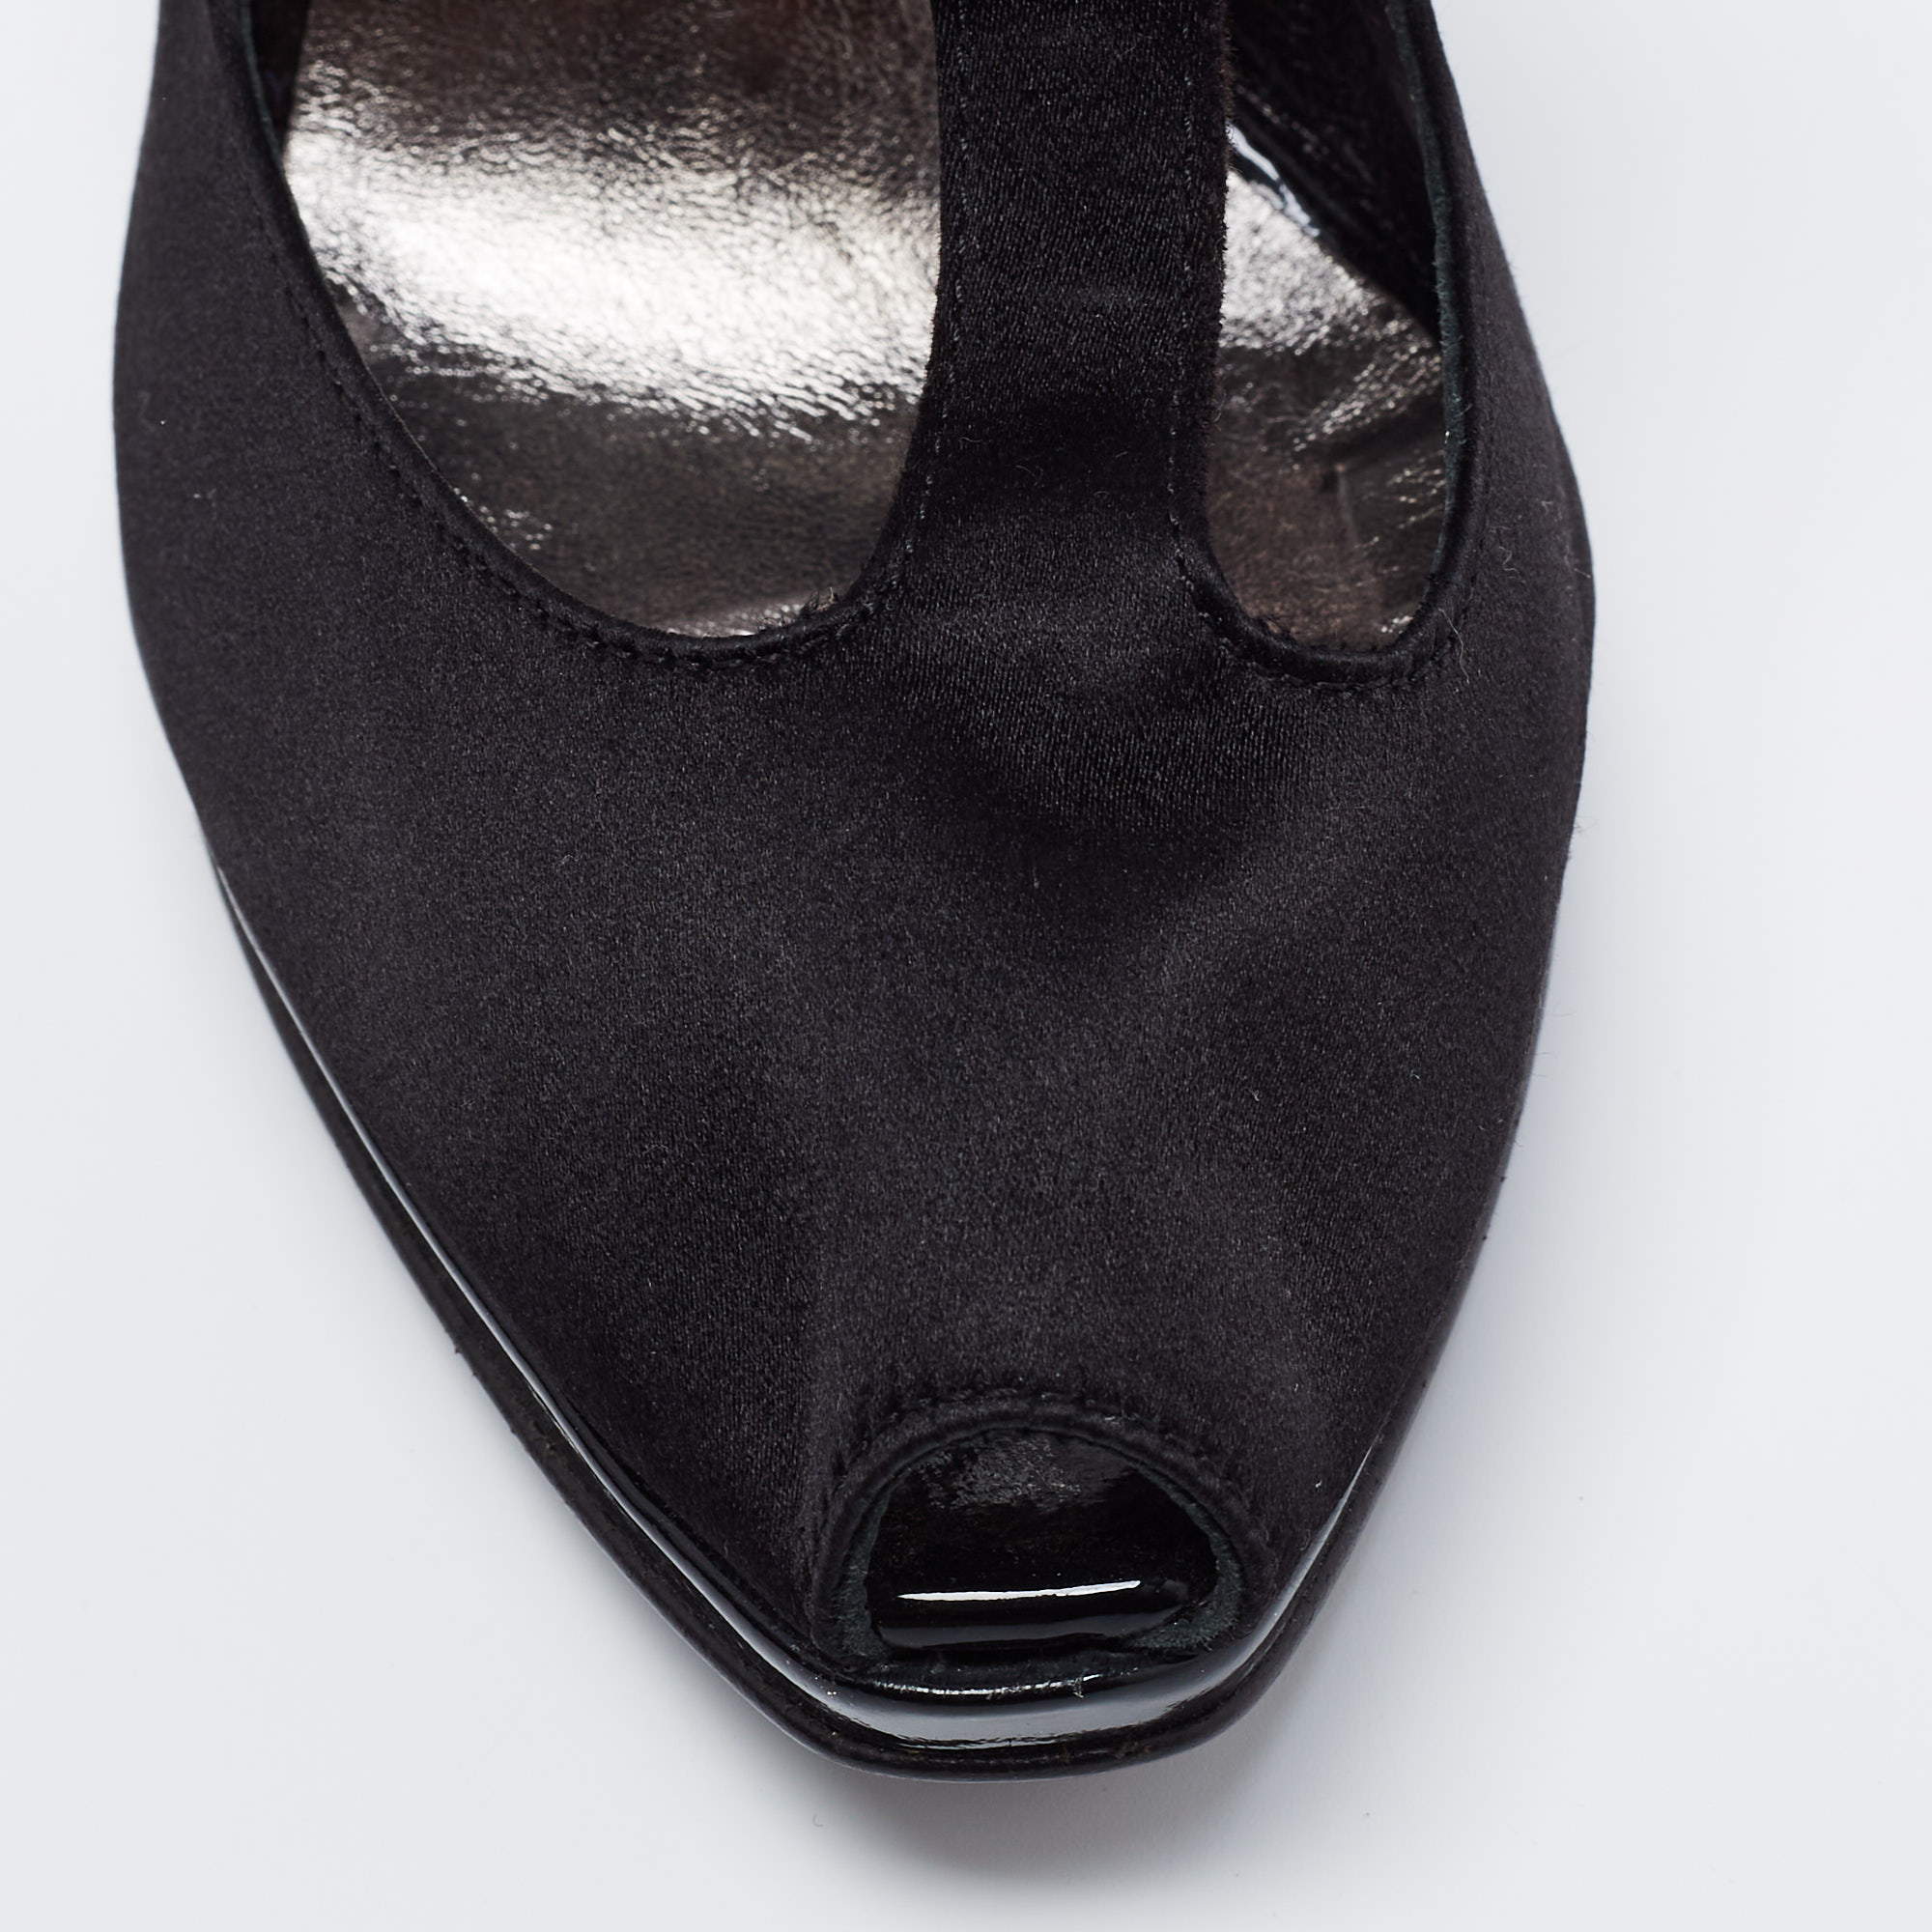 Roberto Cavalli Black Satin Ankle Strap Sandals Size 36